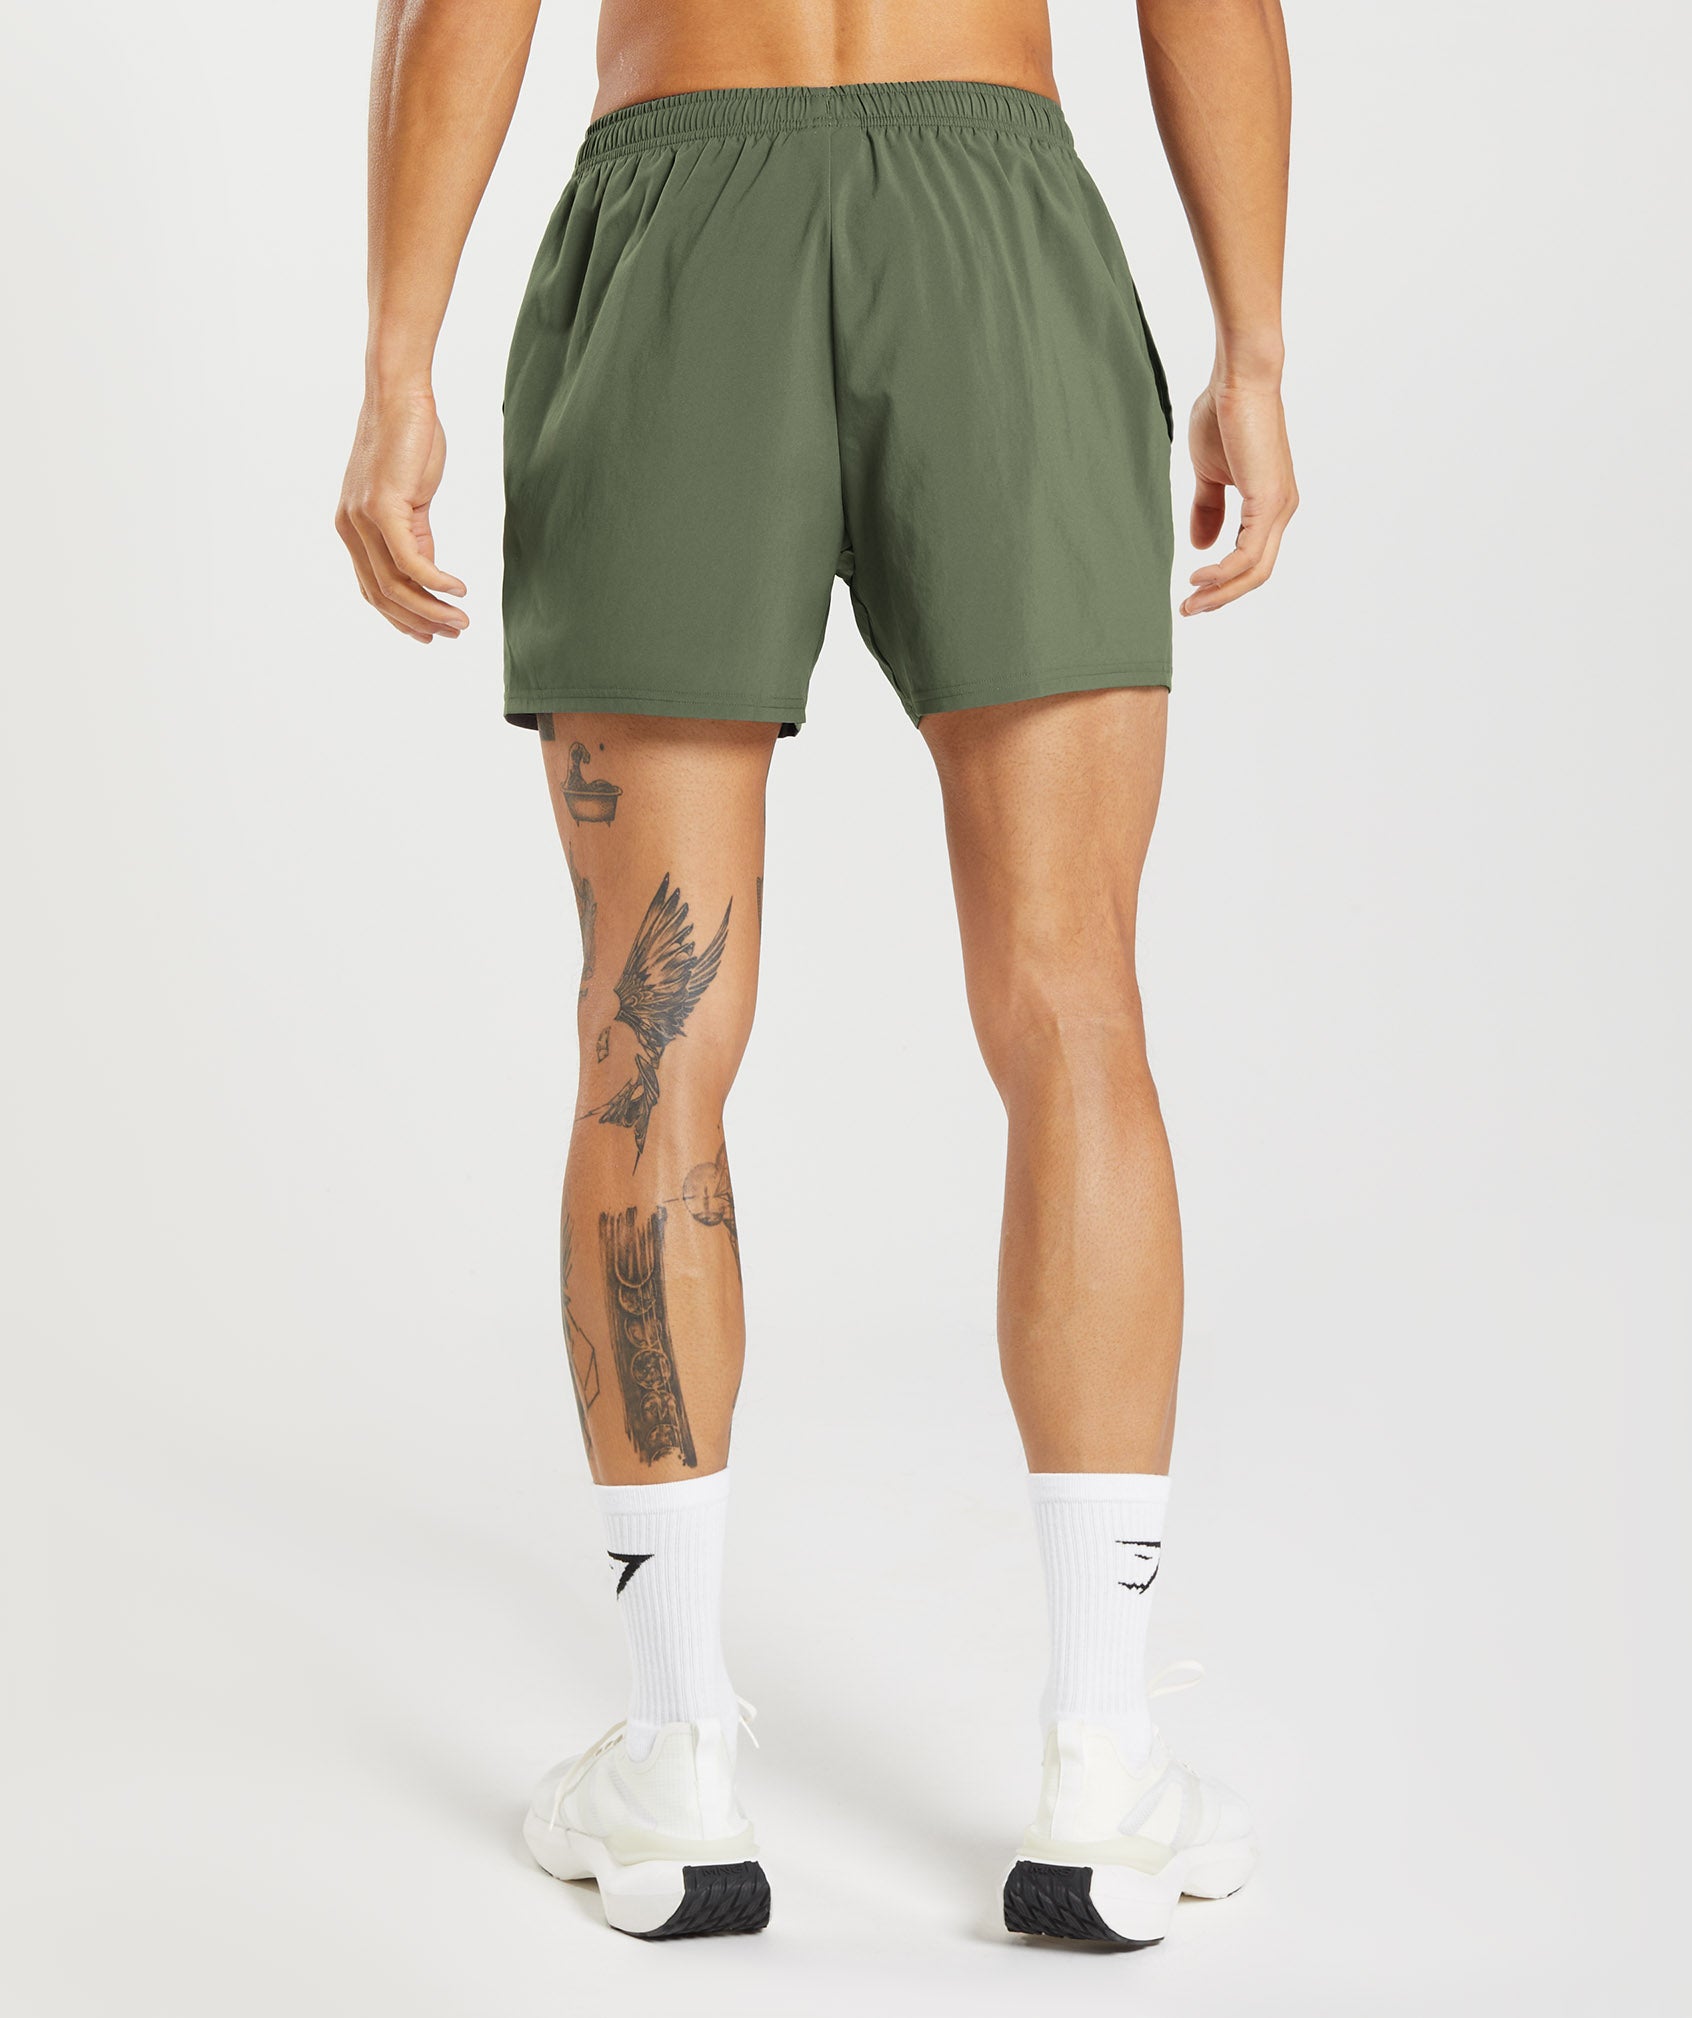 Gymshark Arrival 5 Shorts - Core Olive